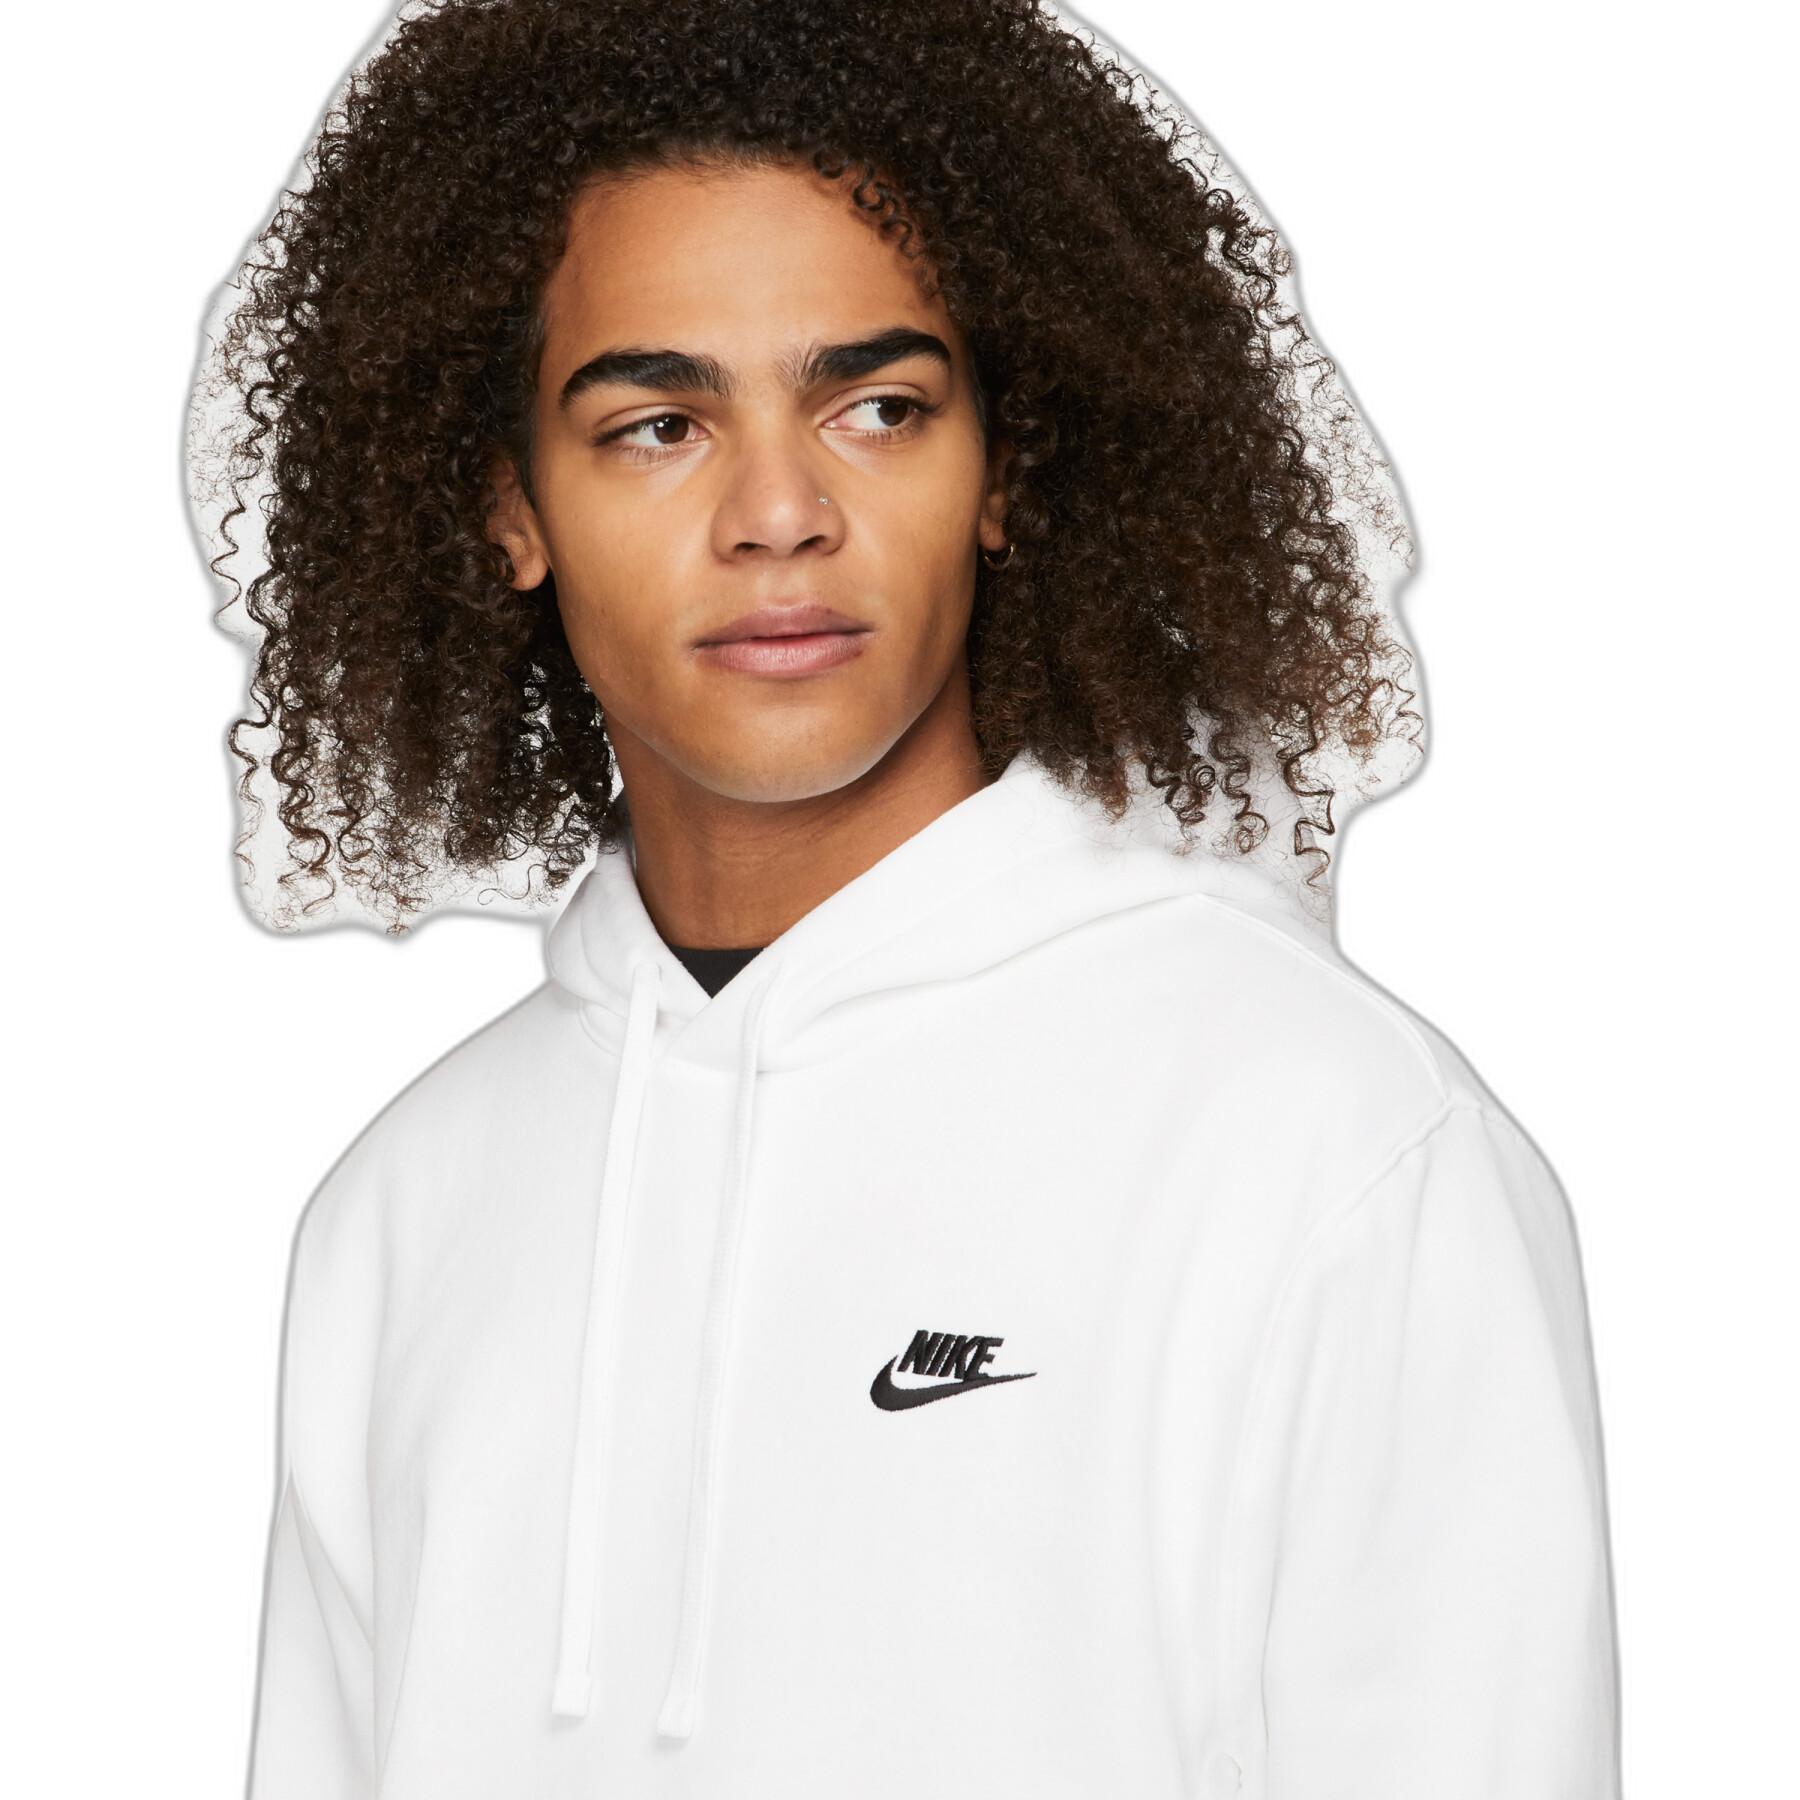 Mesh hoodie Nike Sportswear Club - Nike - Brands - Lifestyle